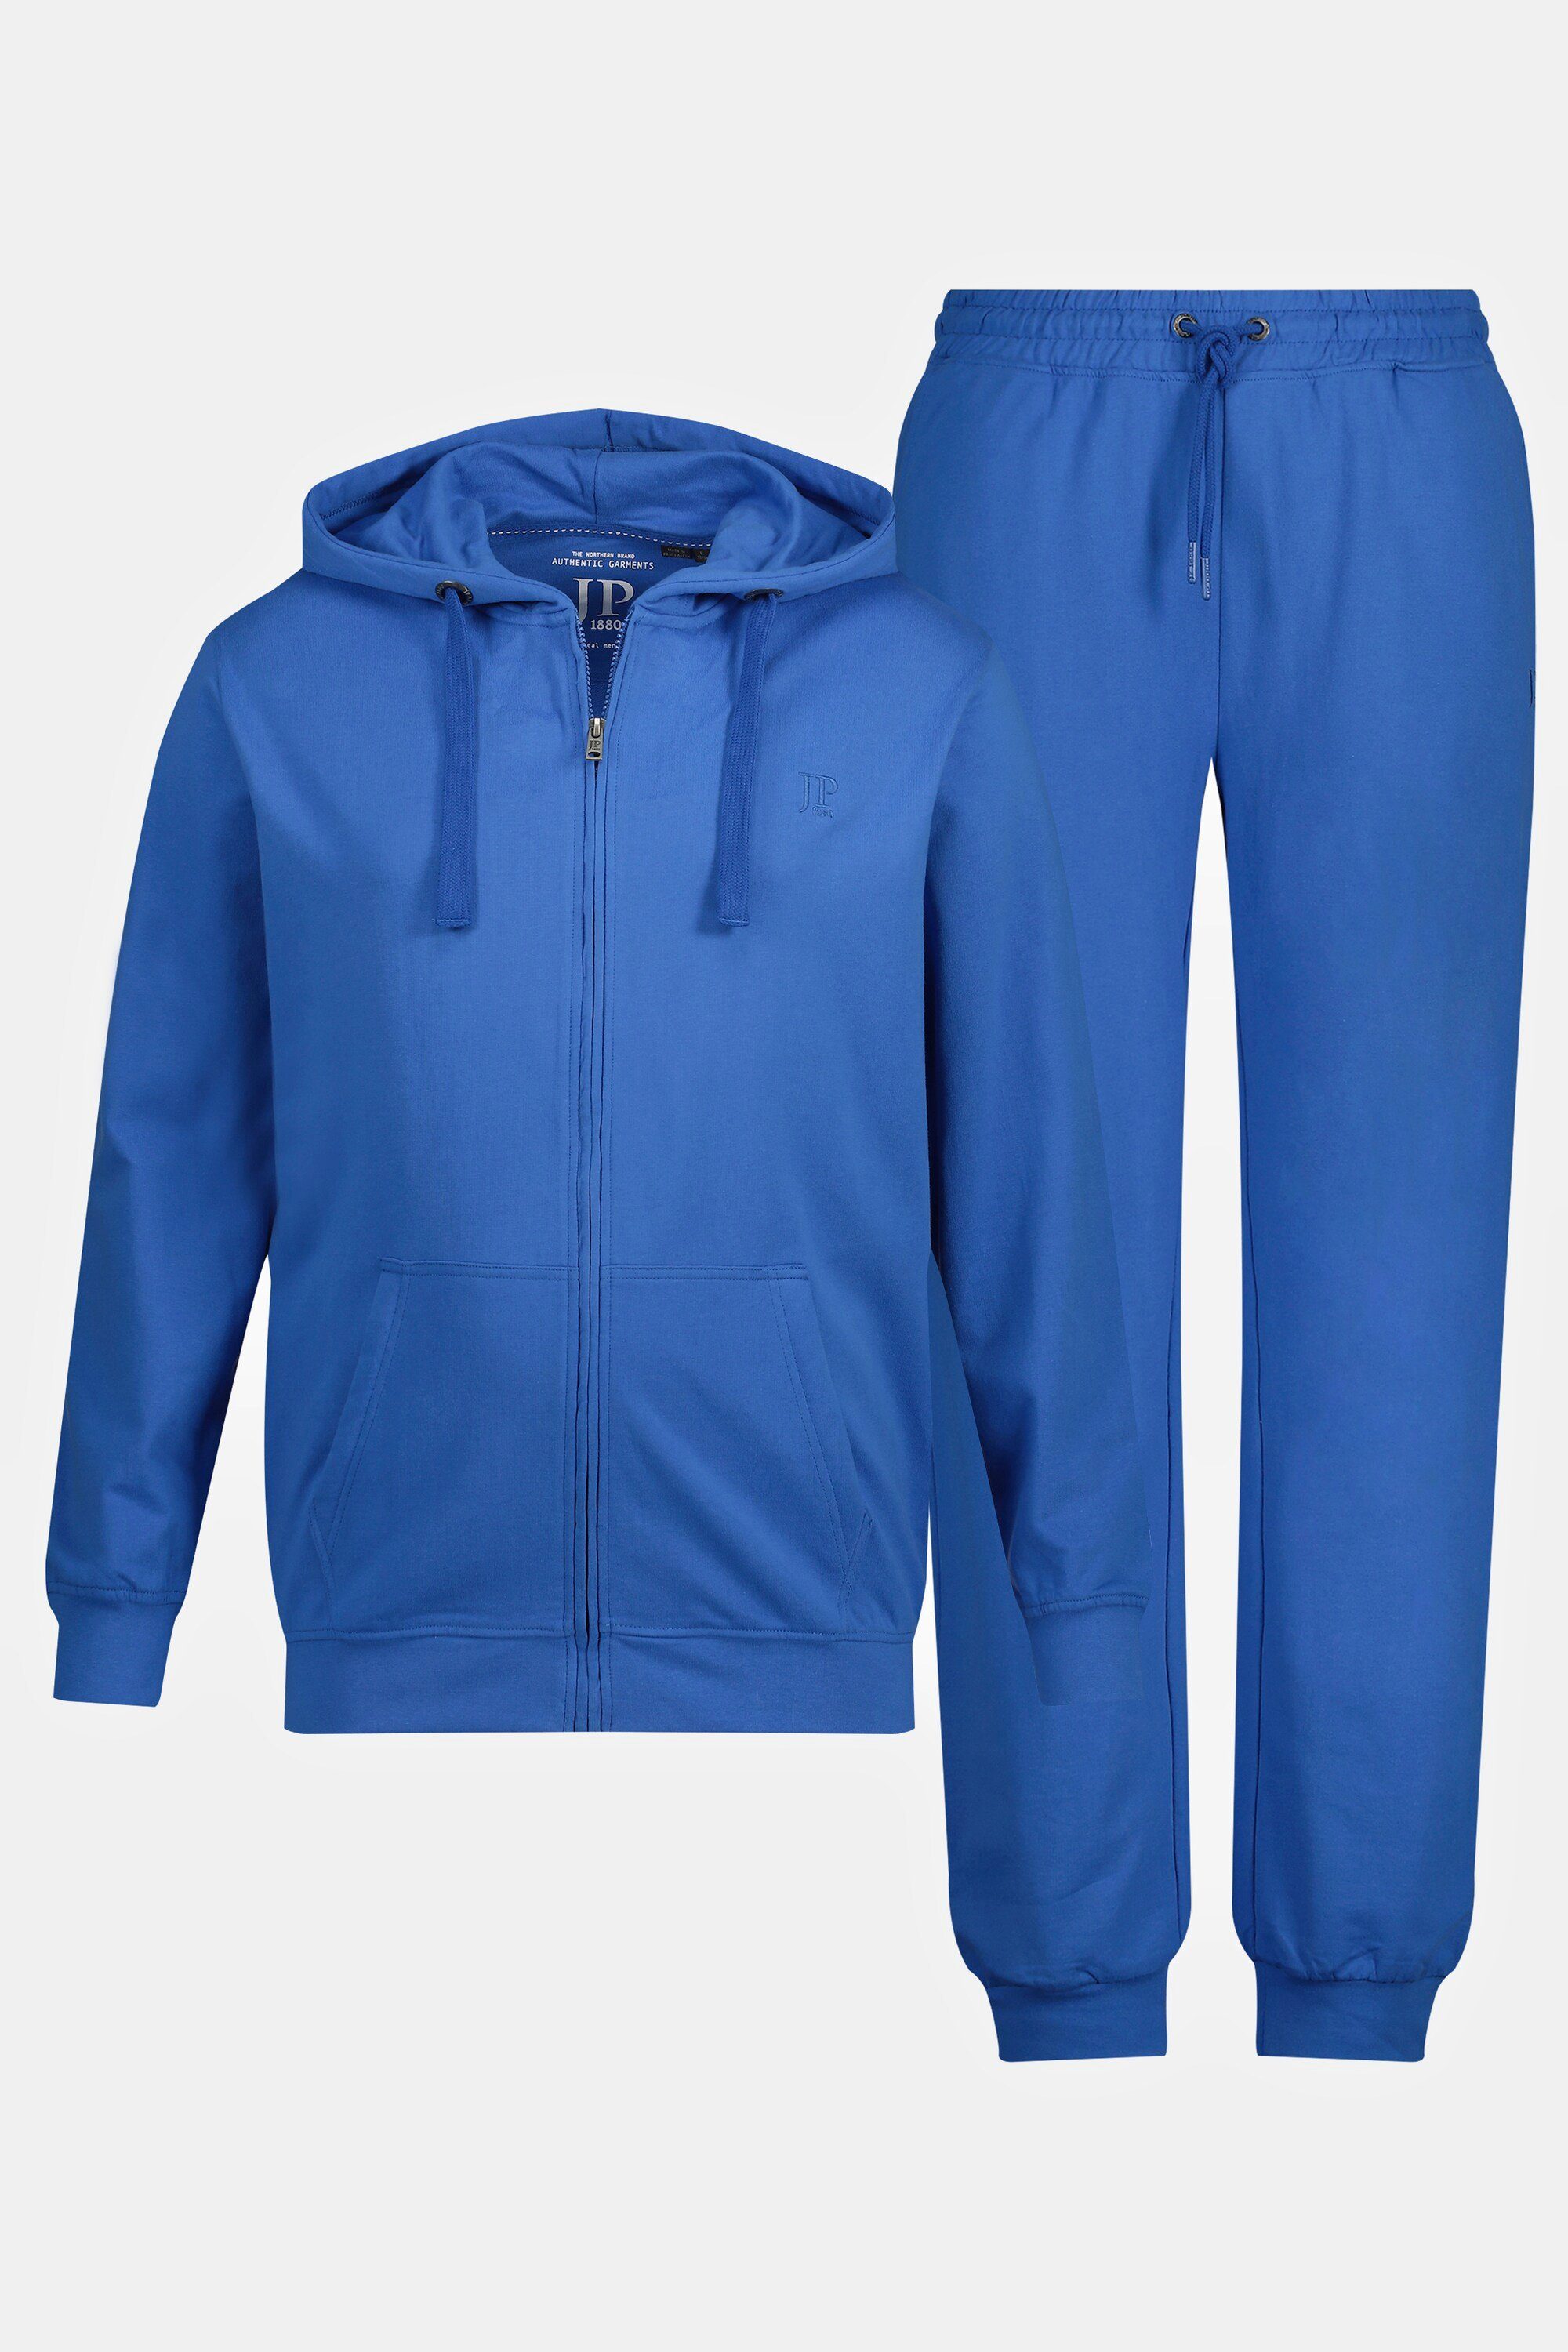 kobalt 2-teilig JP1880 bis Homewear Gr. blau Jogginganzug Fleecejacke 8XL